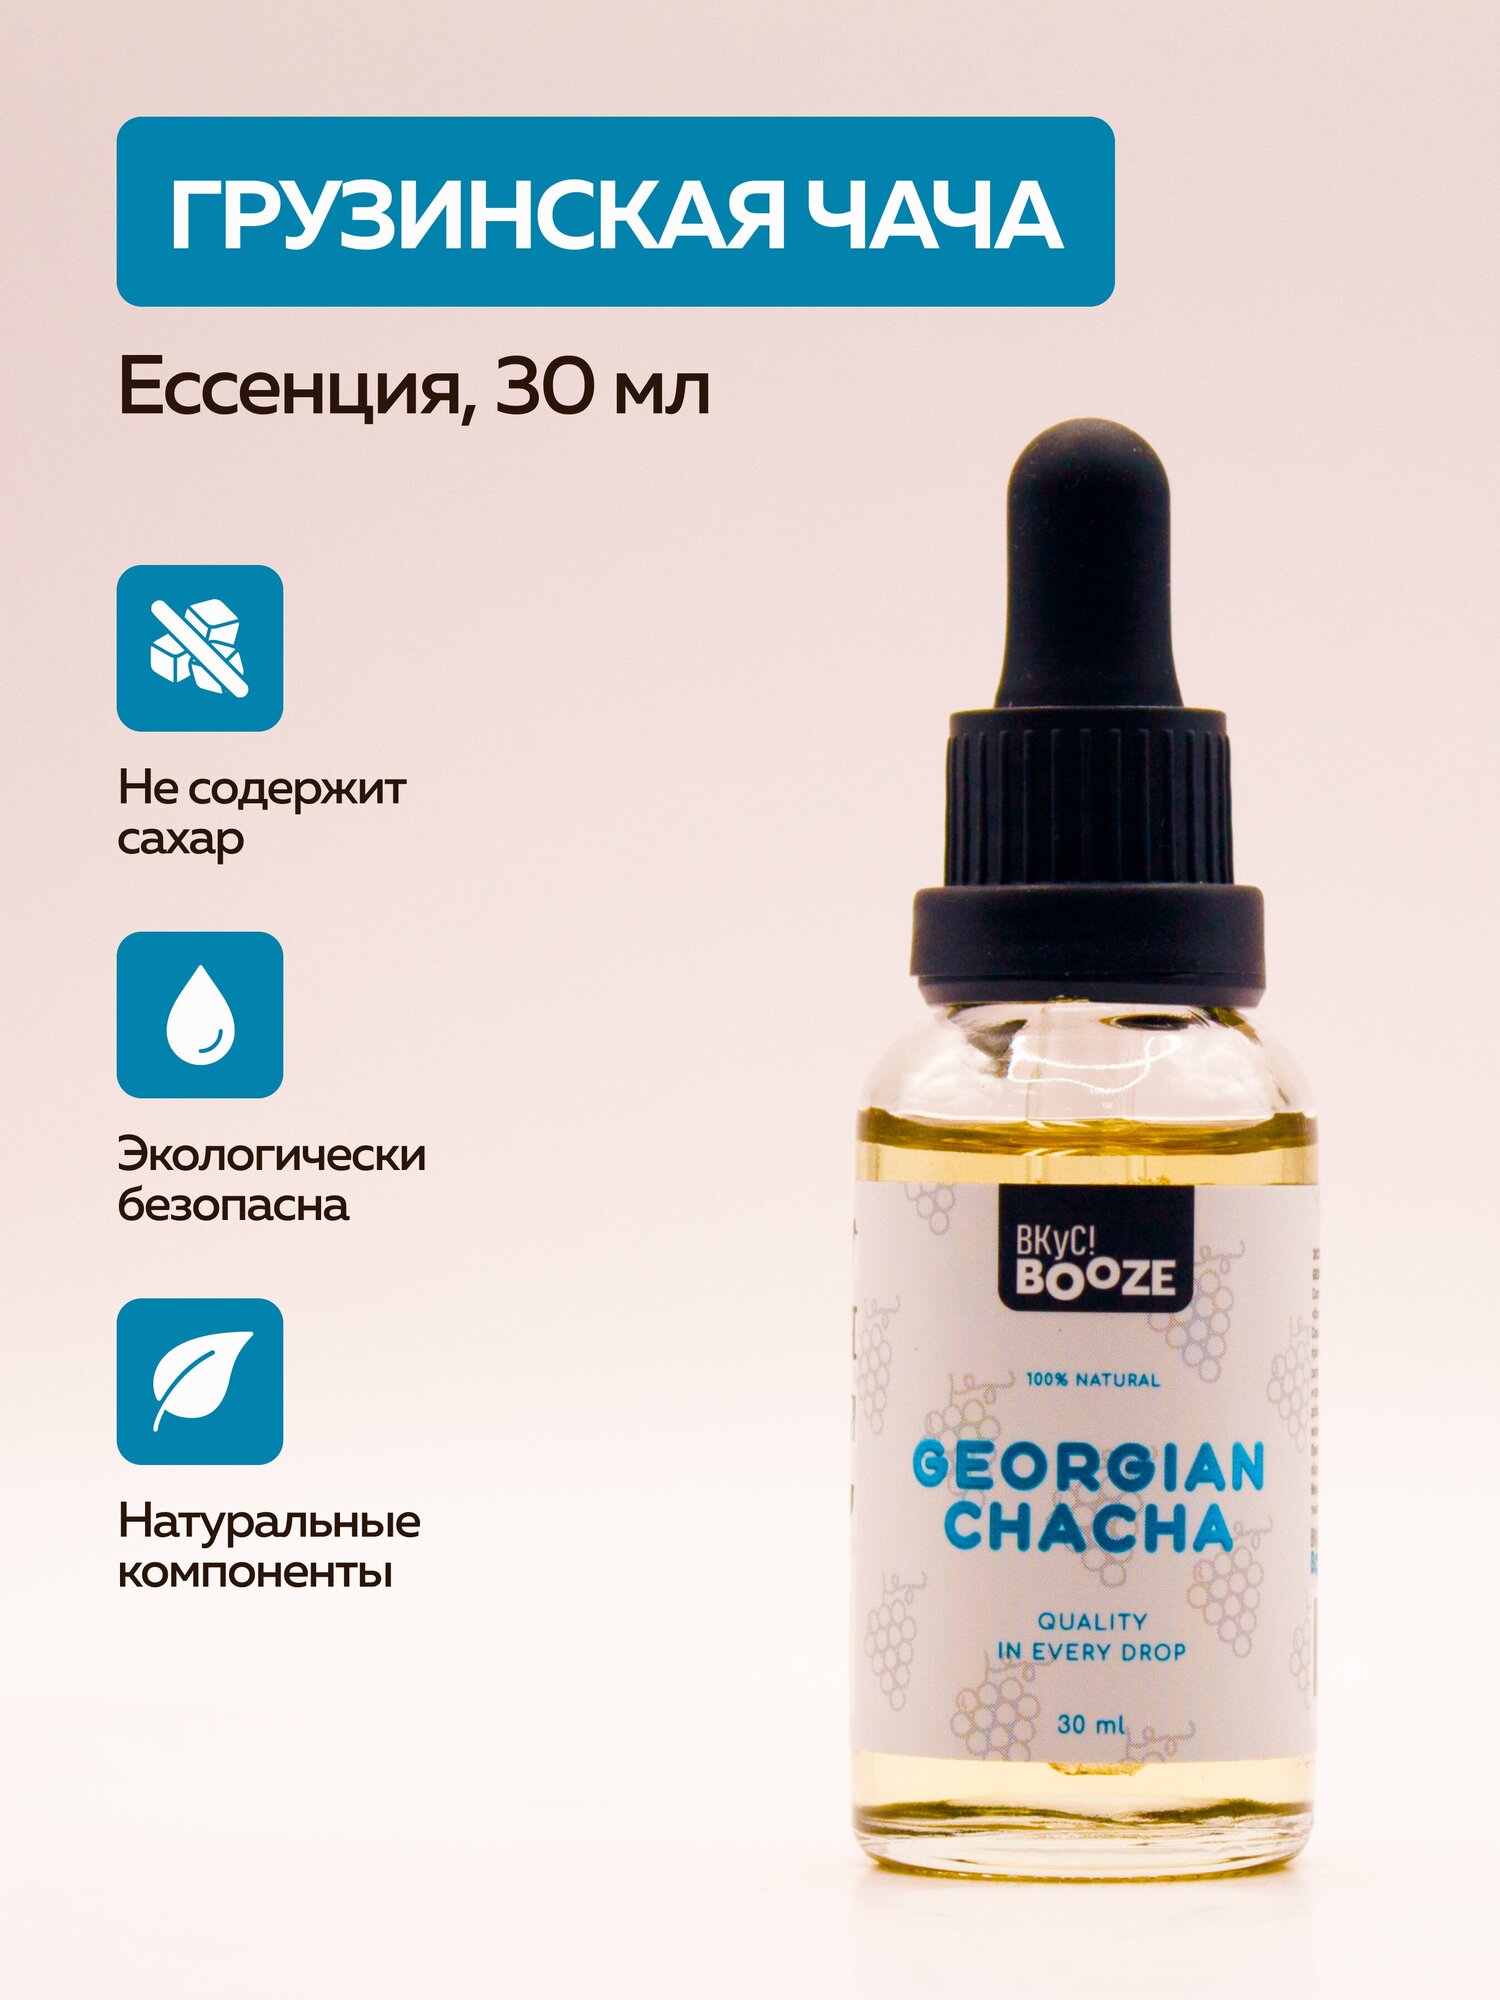 Эссенция Georgian Chacha (Грузинская Чача) 30 ml Вкус! Booze